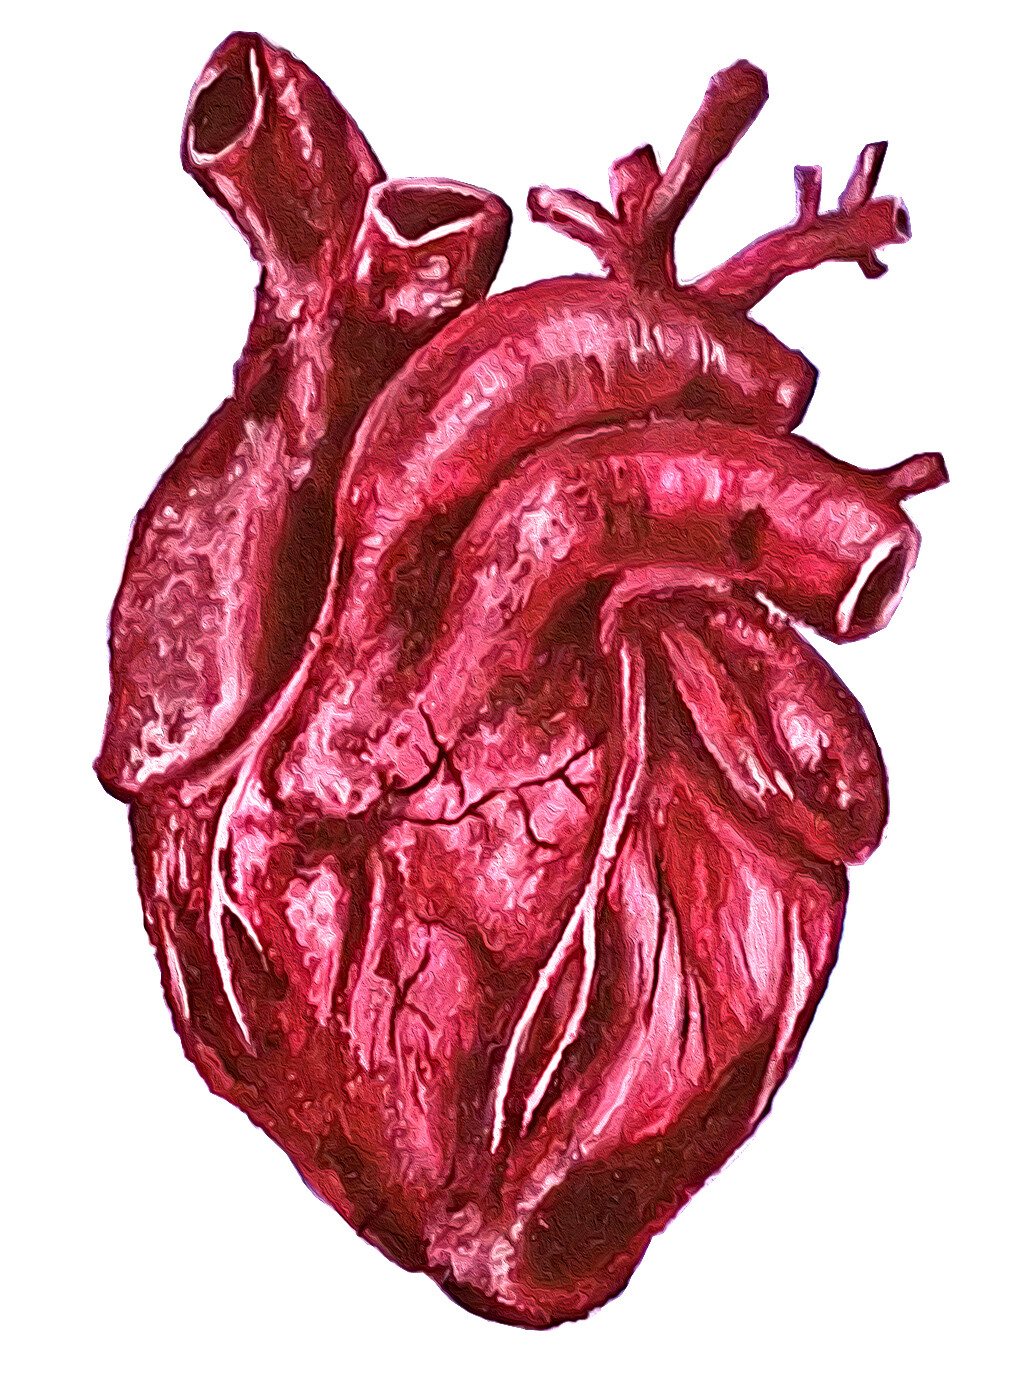 ArtStation - Heart, acrylics